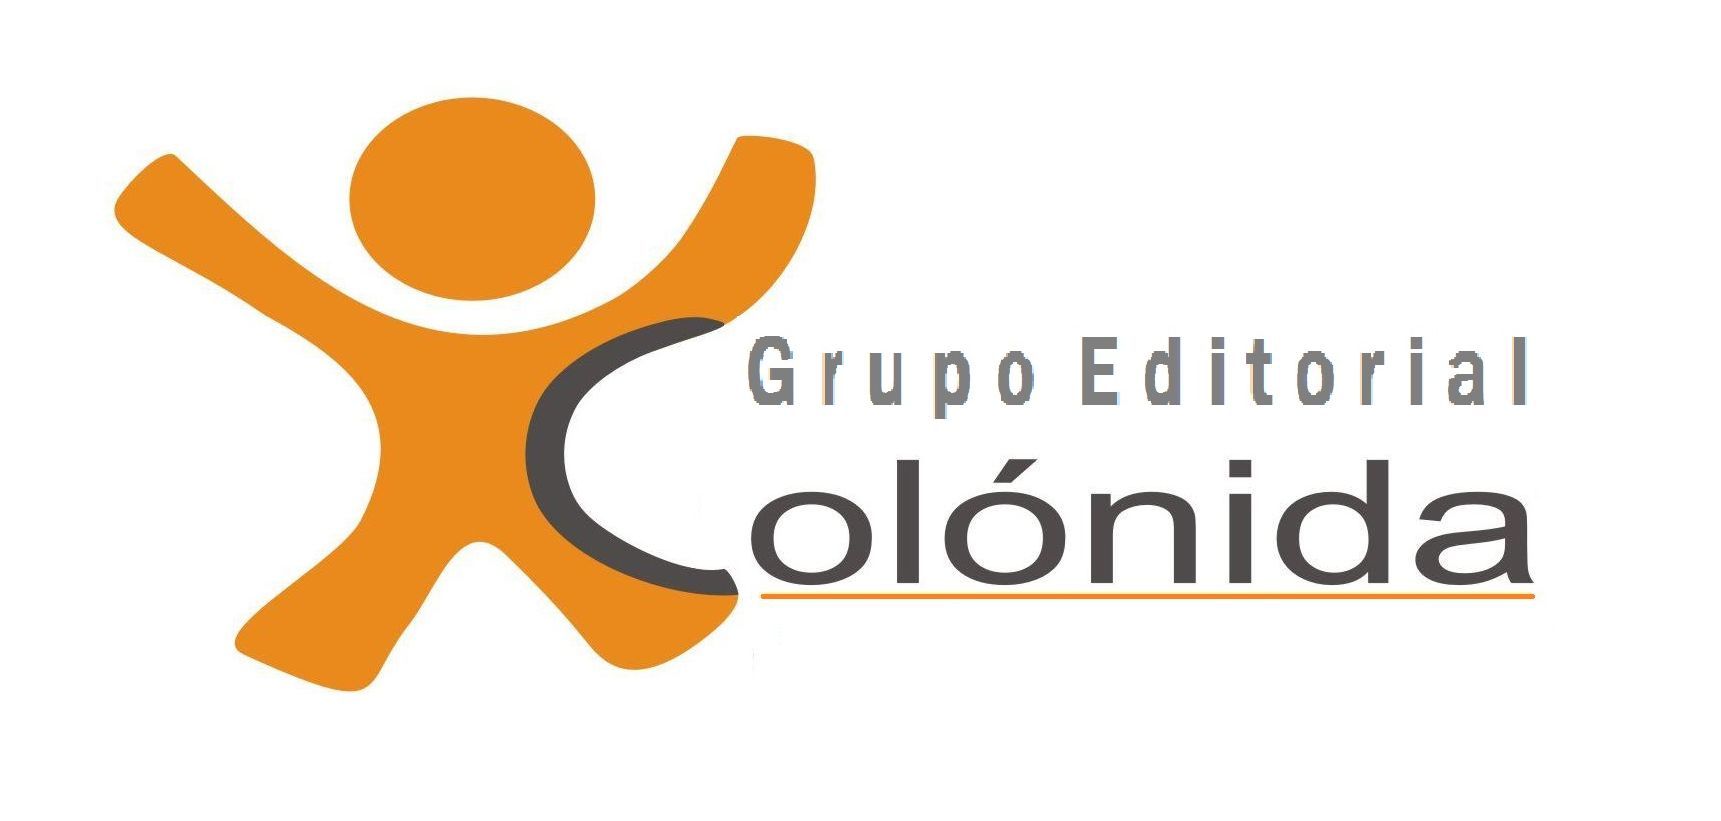 Grupo Editorial Colónida